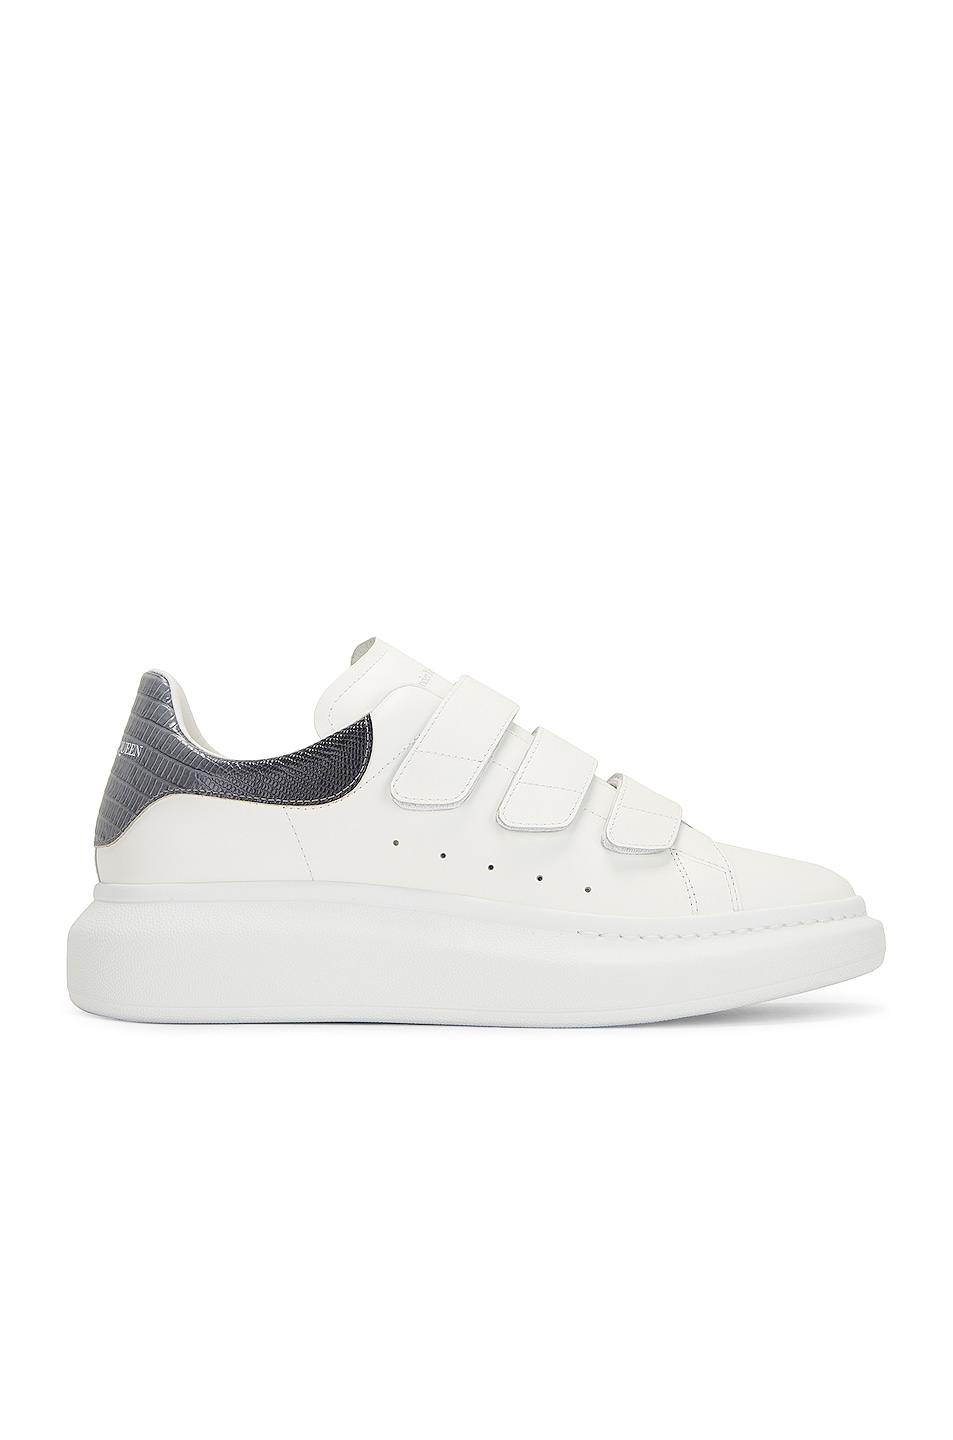 Image 1 of Alexander McQueen Strap Sneaker in White & Grey